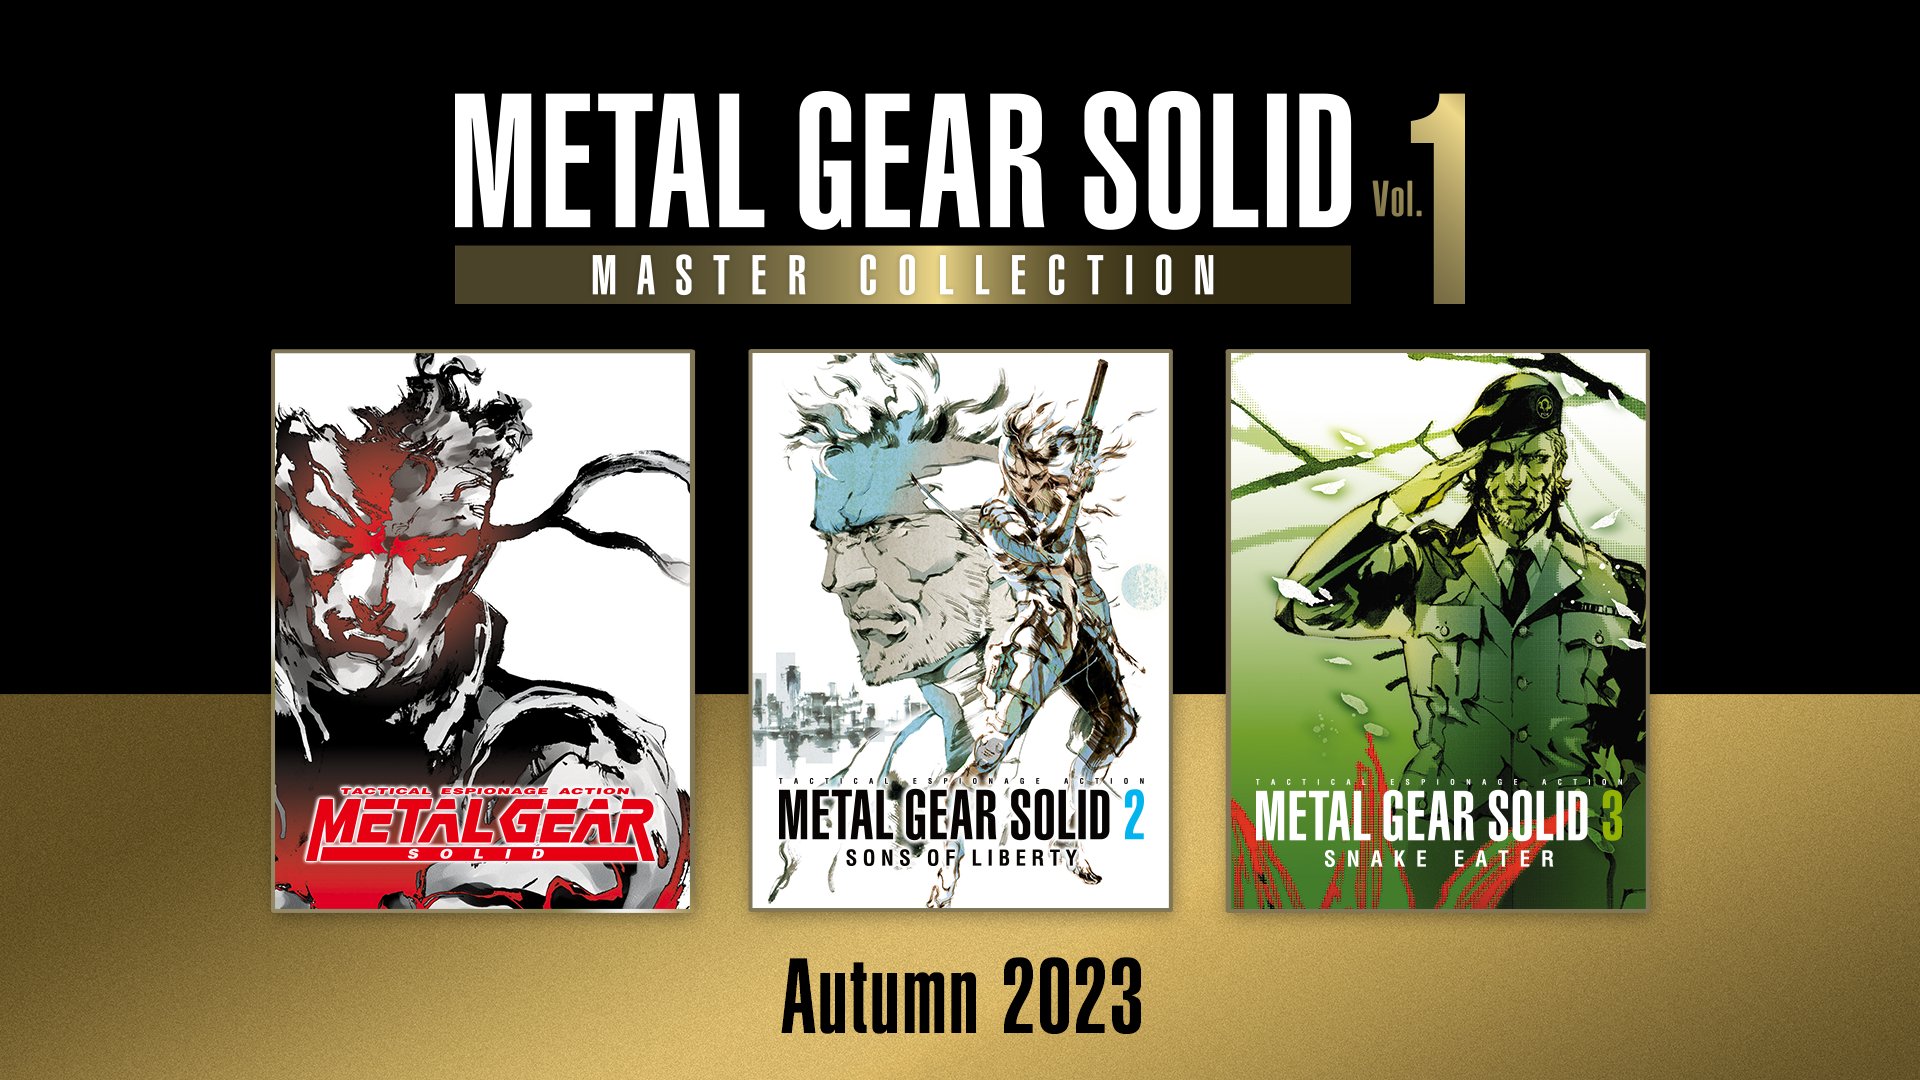 Square Enix announces TGS 2023 lineup, schedule - Gematsu